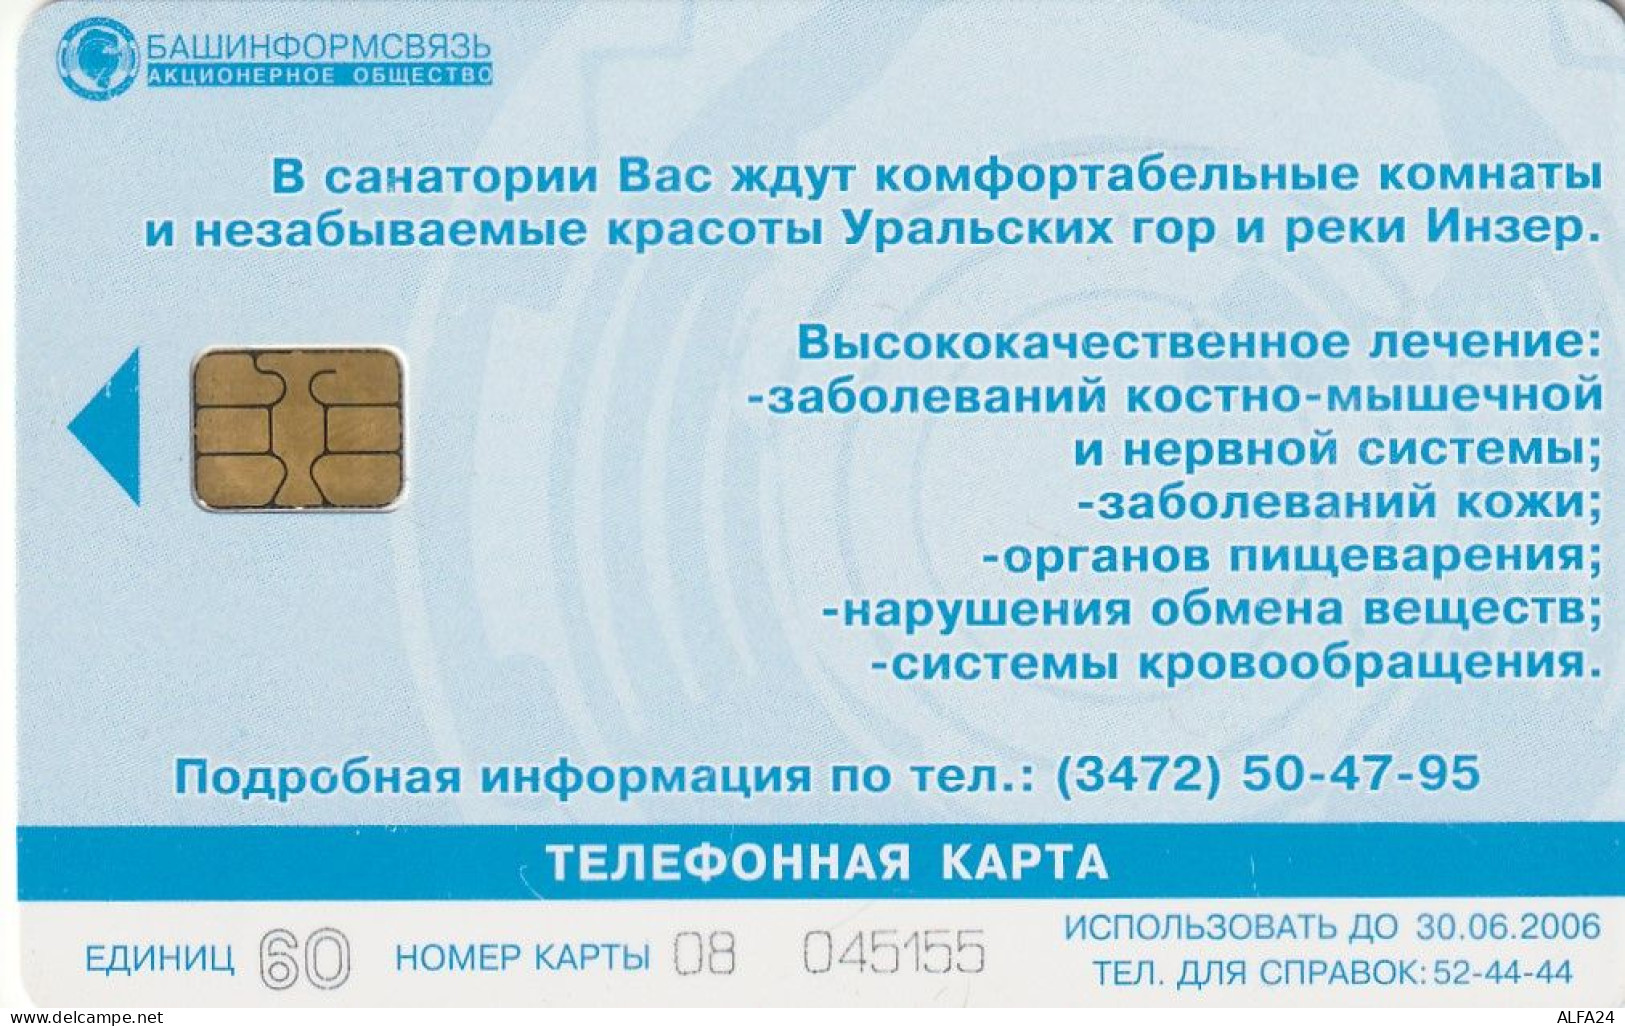 PHONE CARD RUSSIA Bashinformsvyaz - Ufa (E9.25.6 - Russia